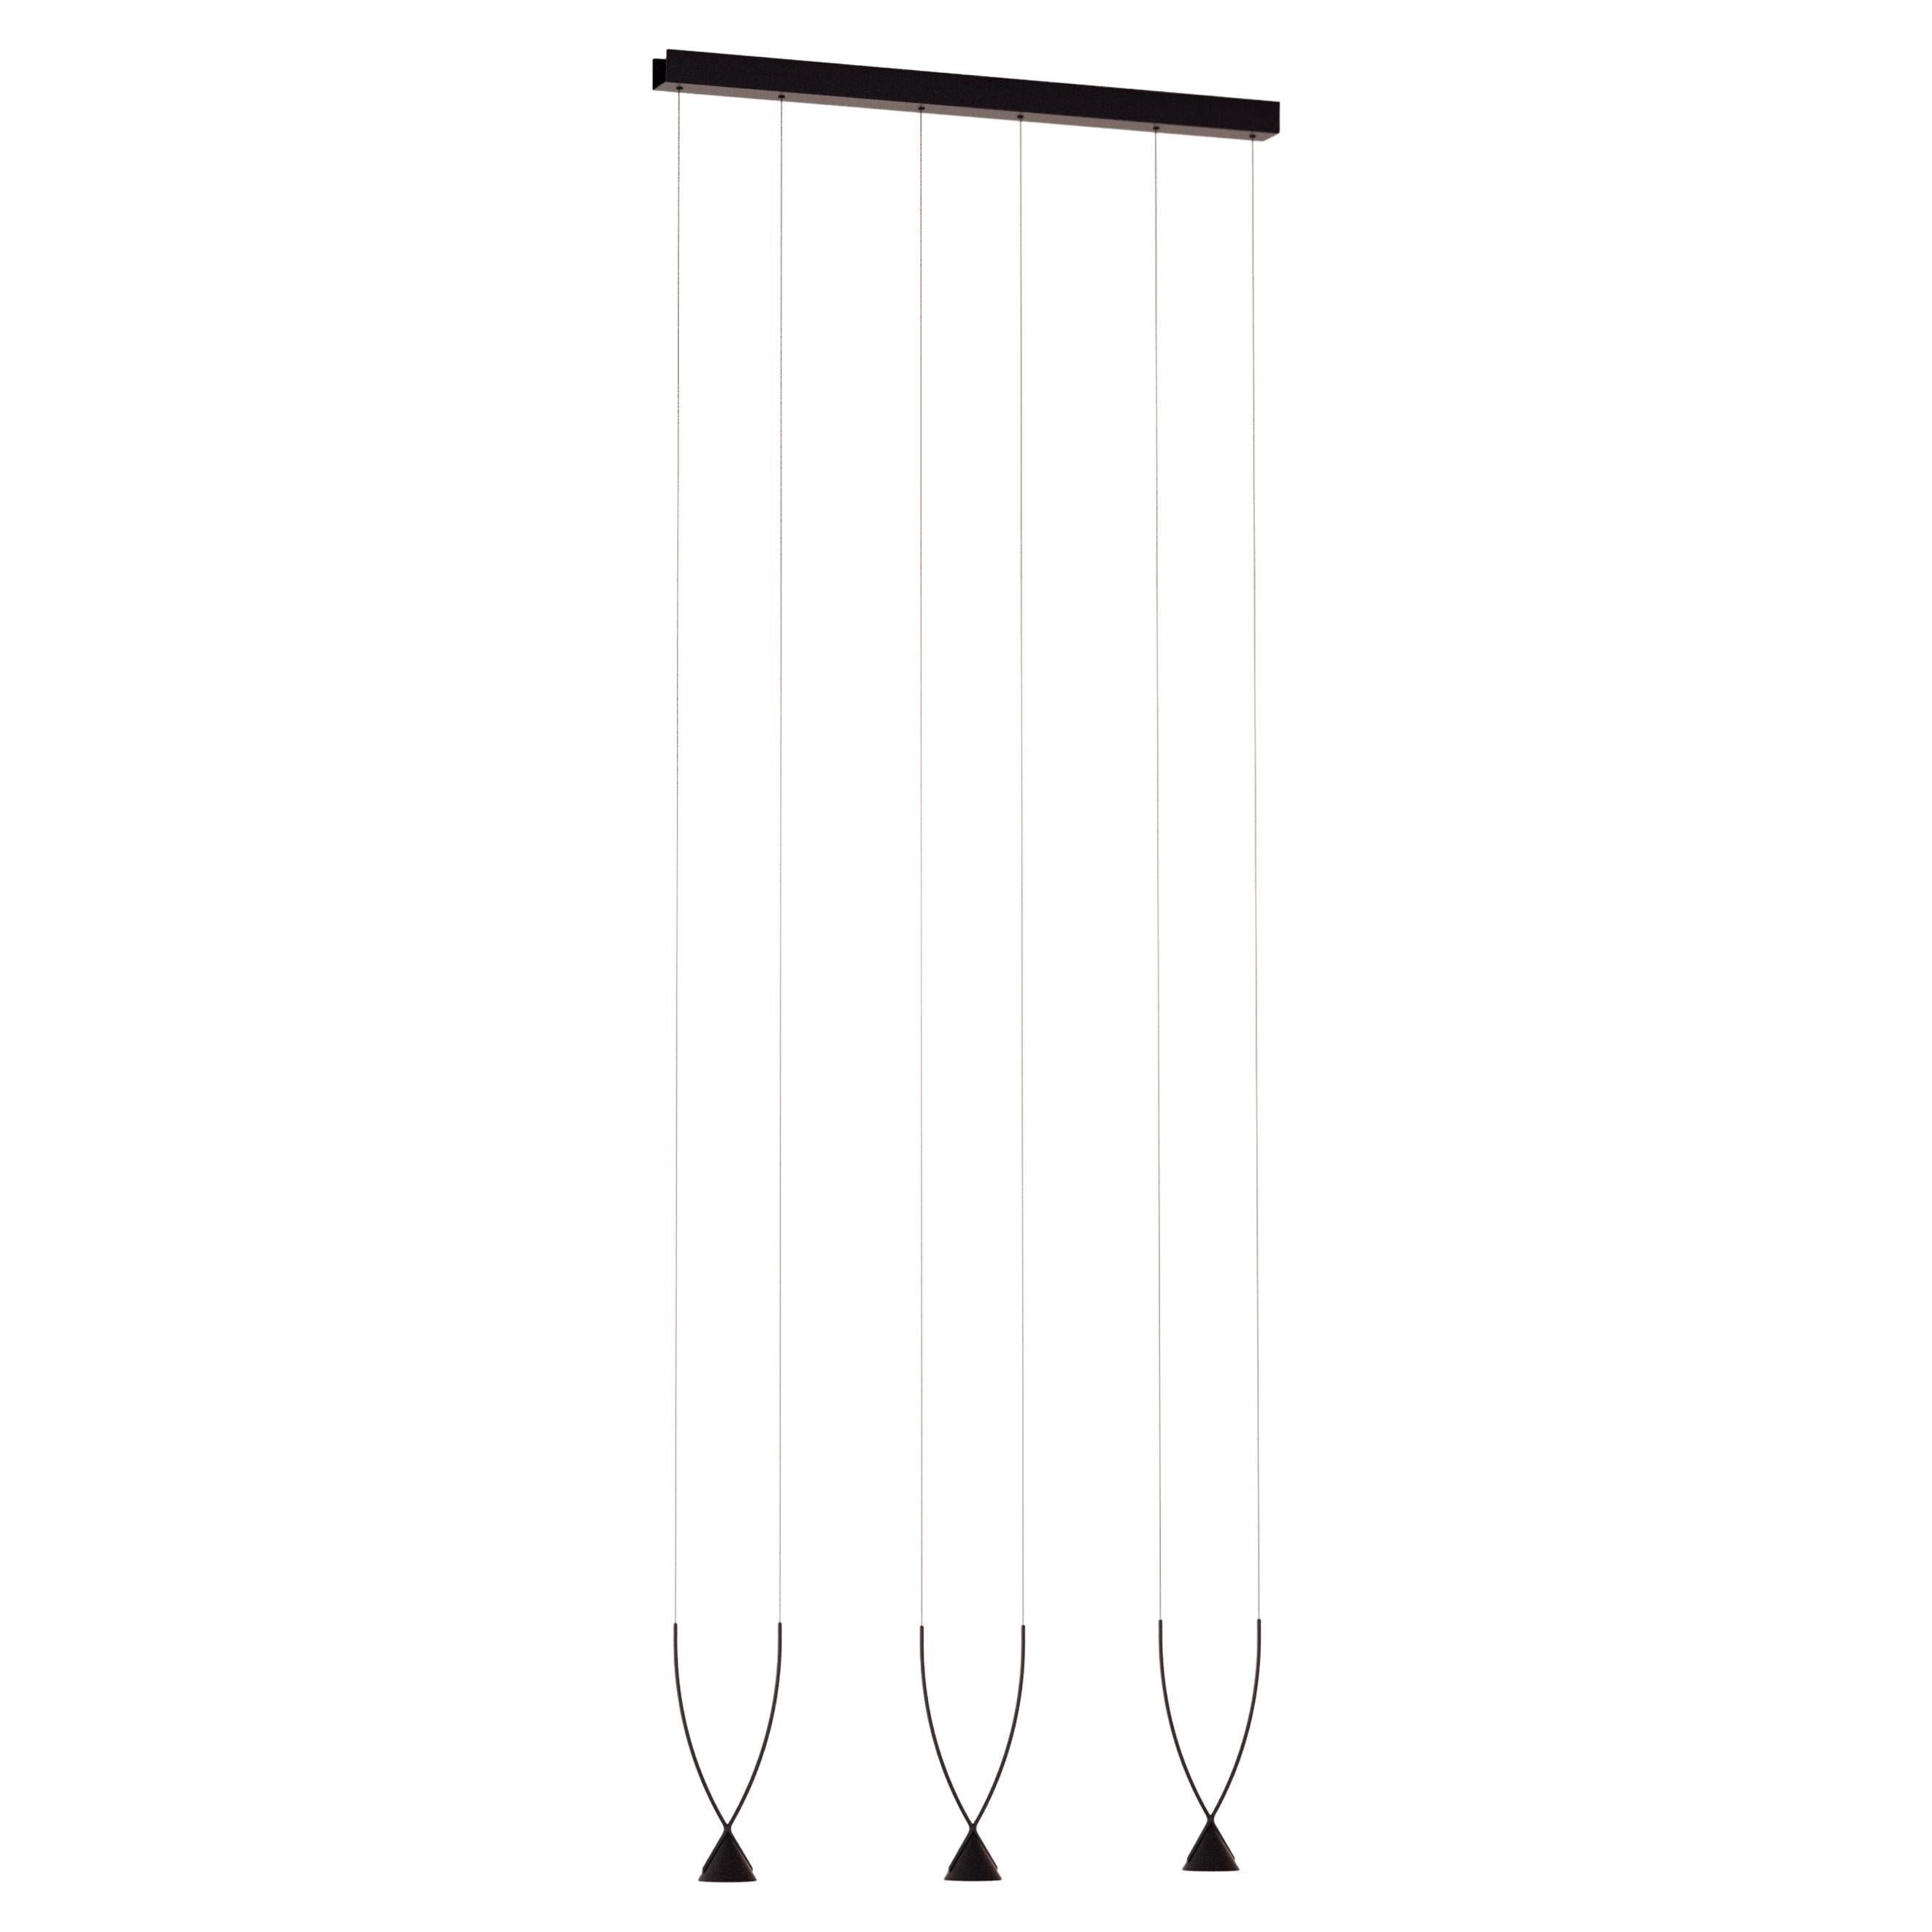 Axolight Jewel Medium 4 Pendant Lamp in Black with Black Finish by Yonoh For Sale